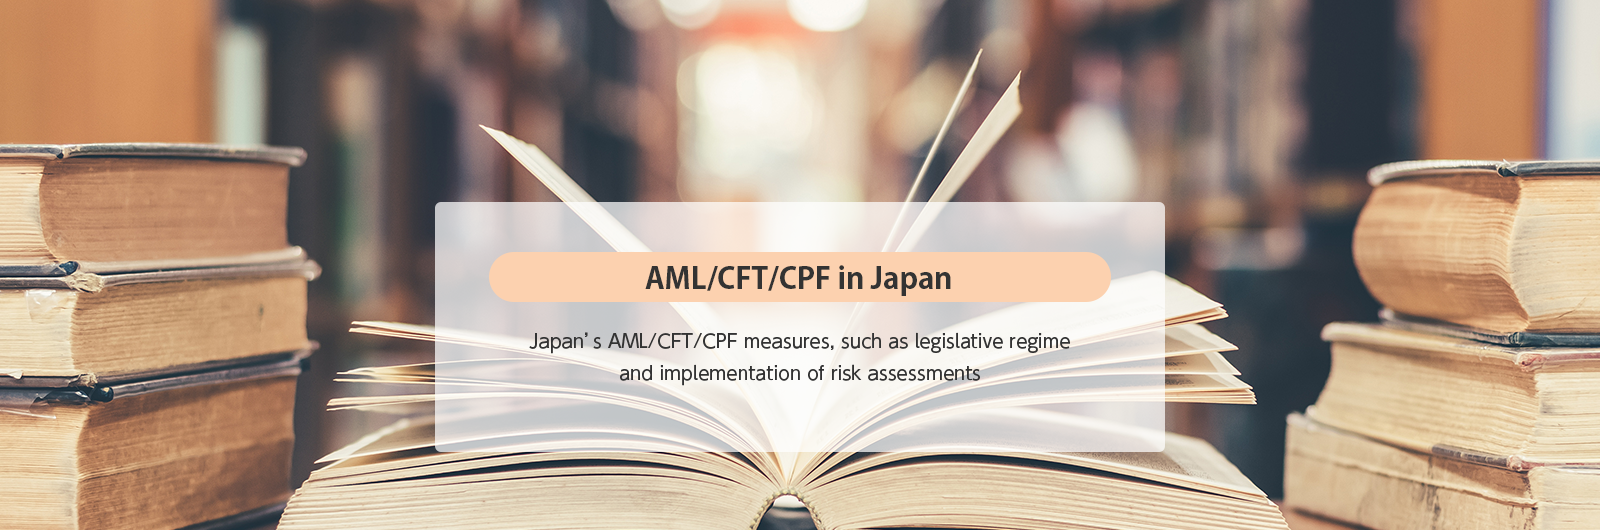 AML/CFT/CPF in Japan